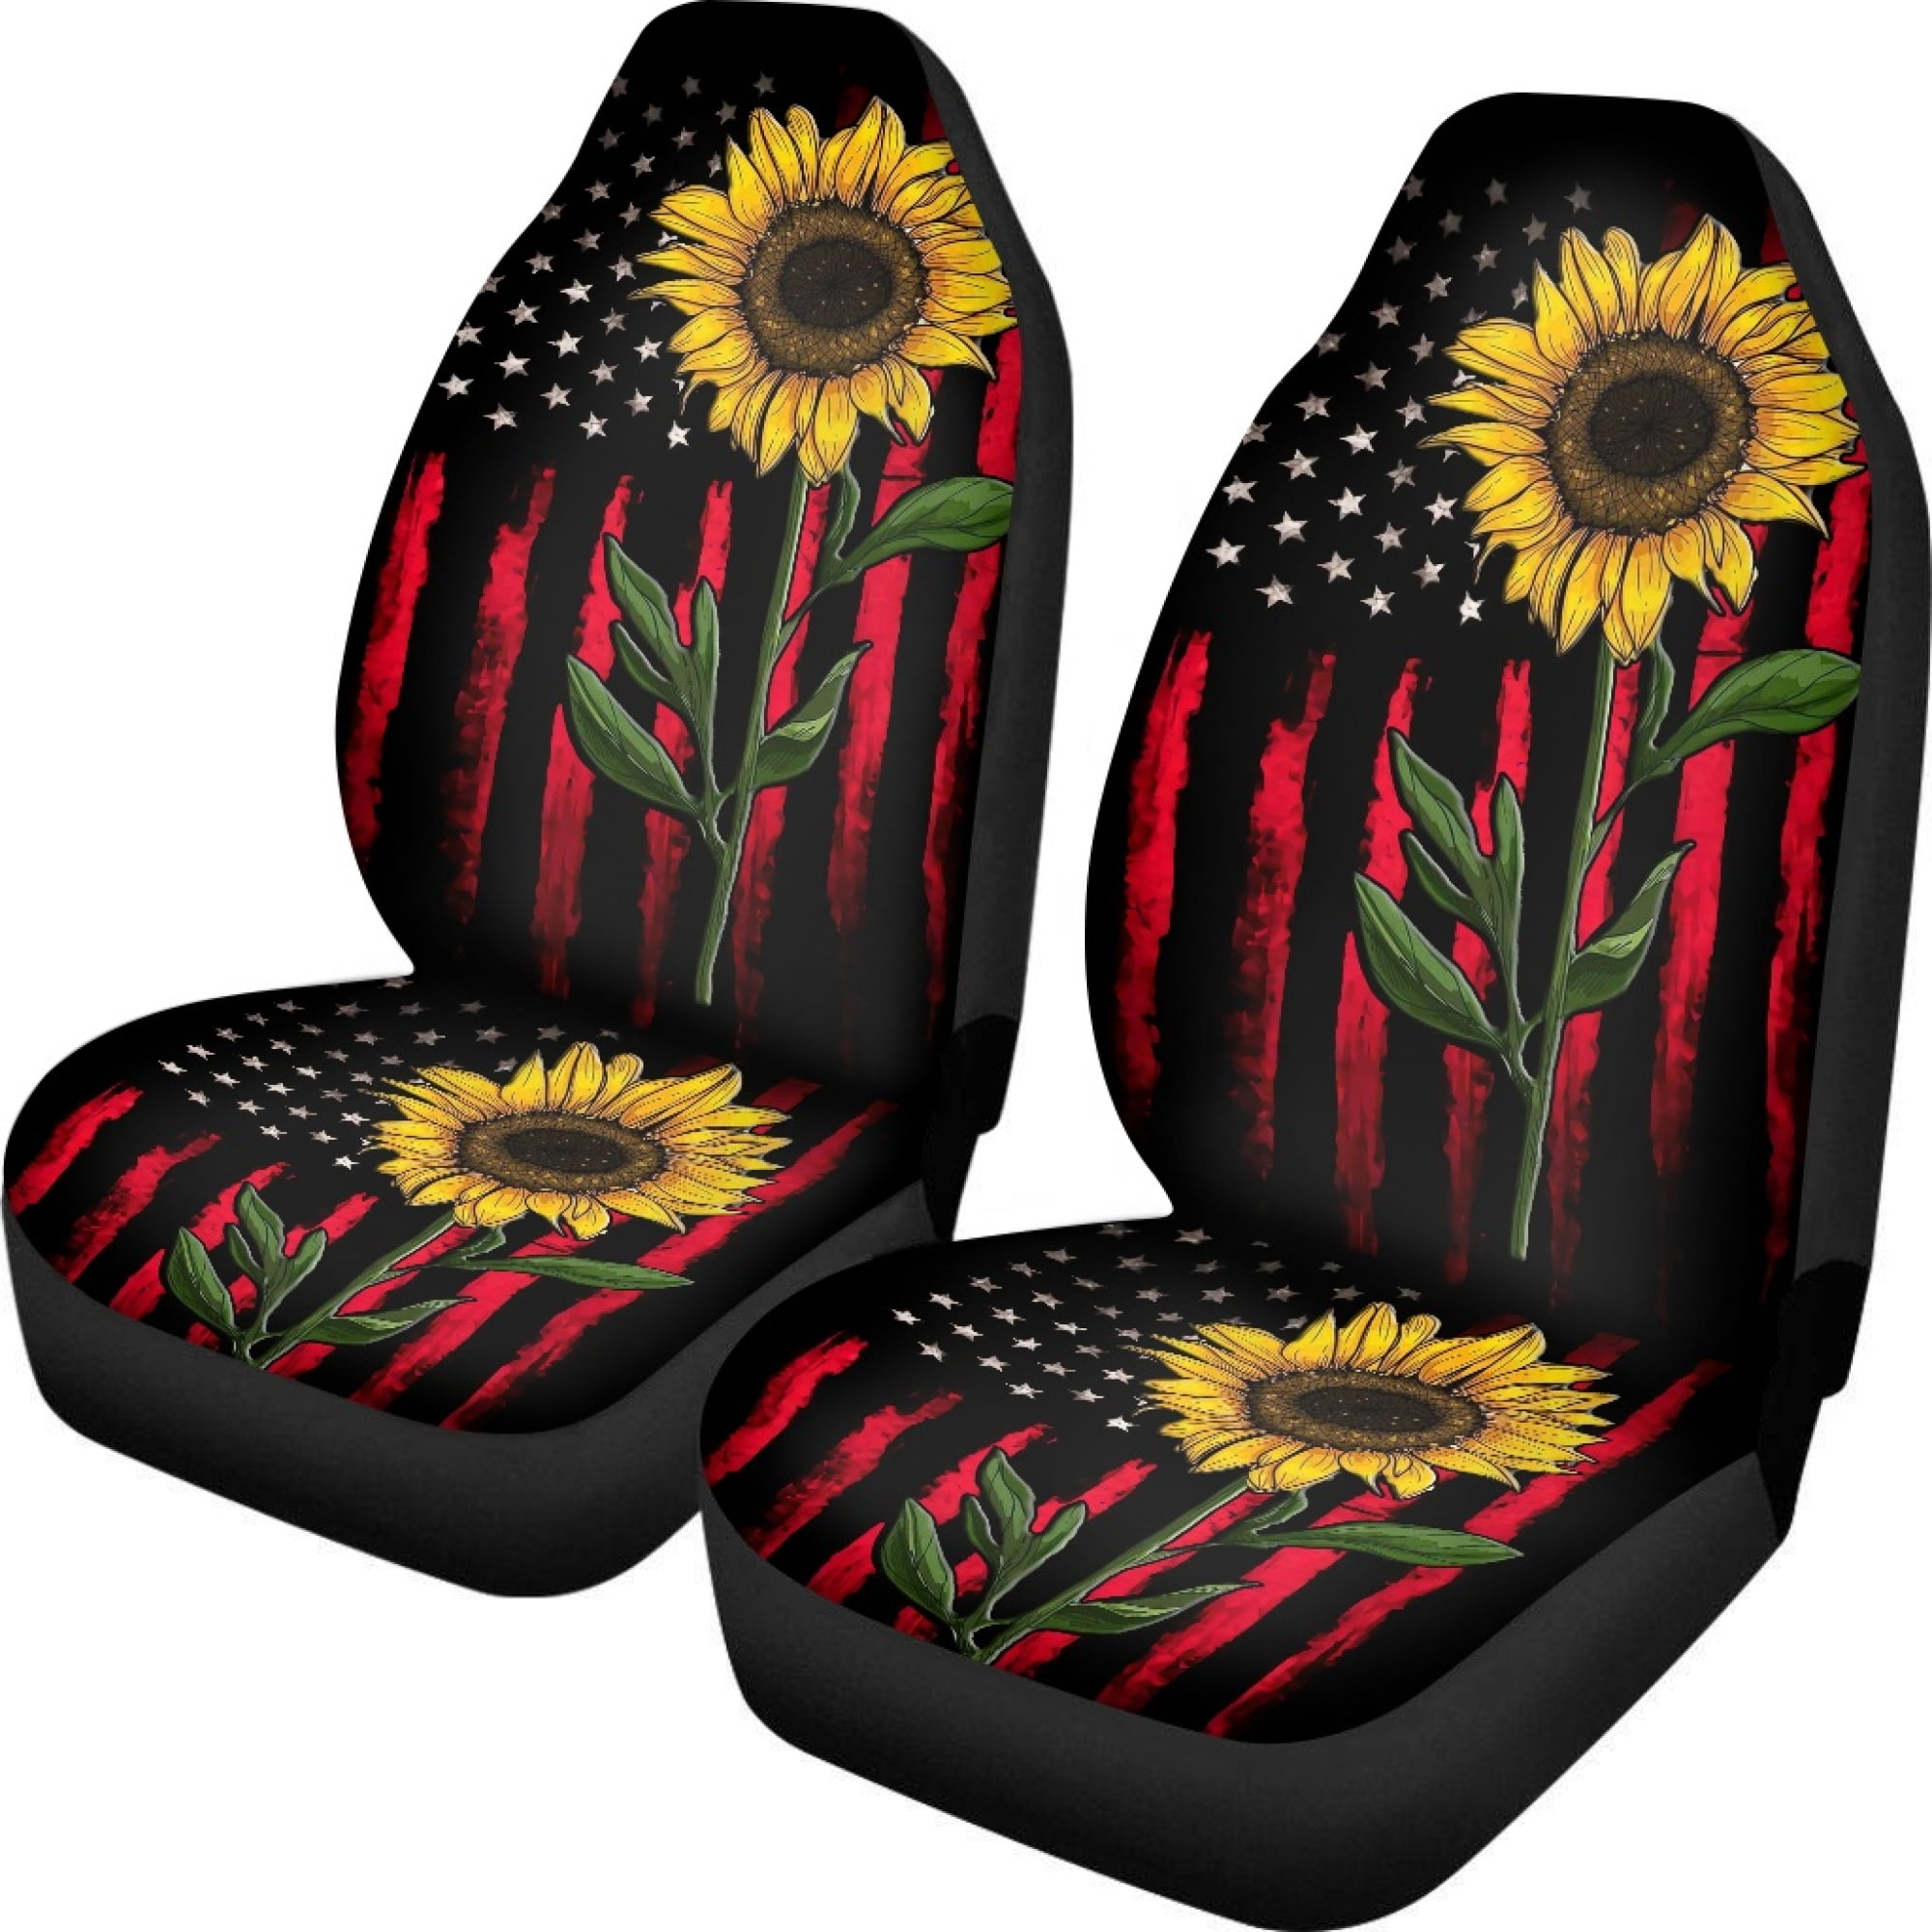 NETILGEN Abstract Sunflower American Flag Car Covers Set of 2 Pack